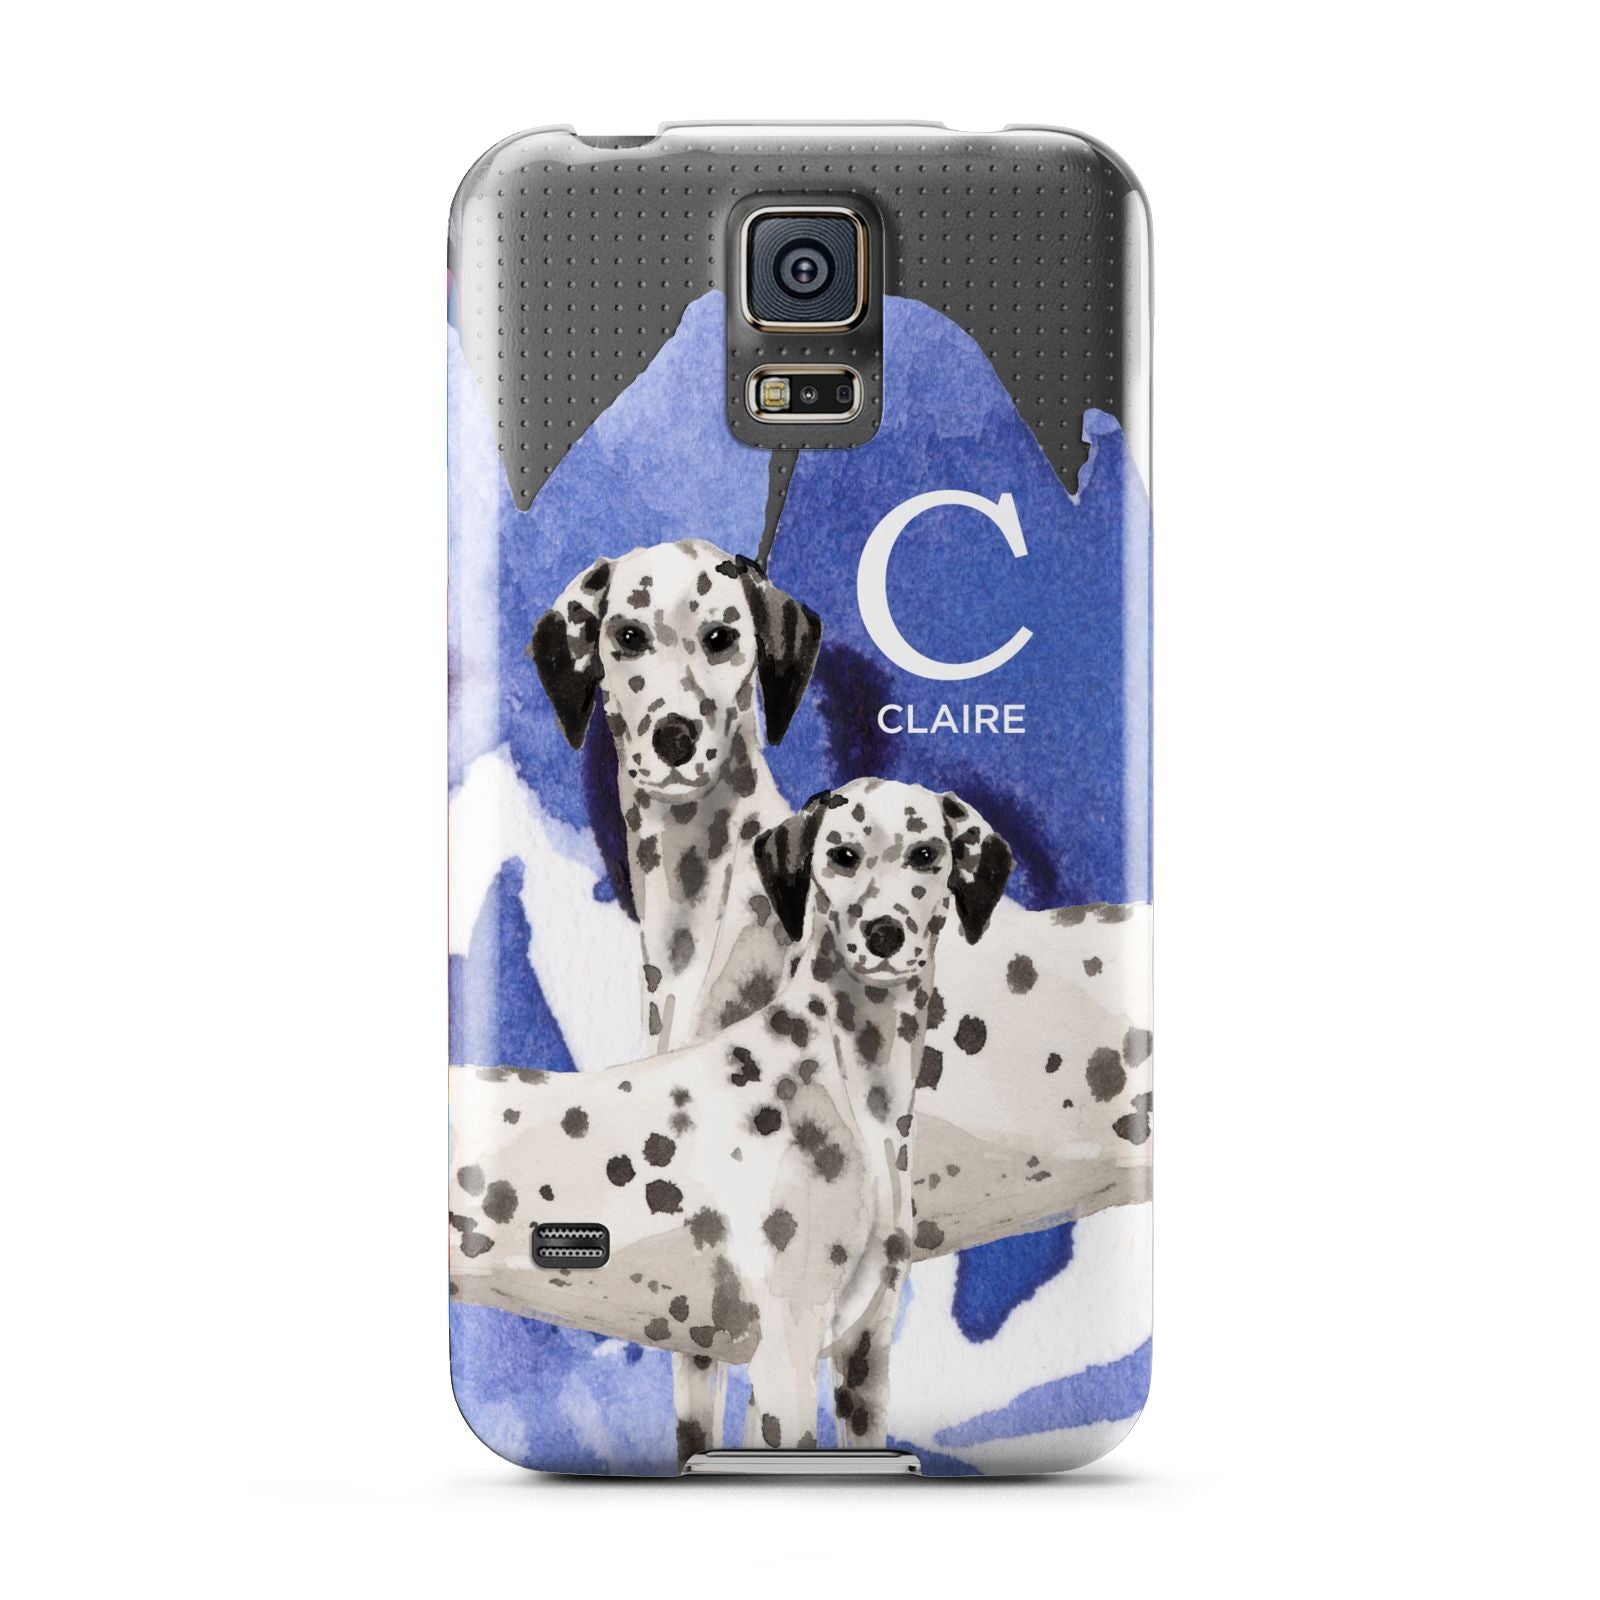 Personalised Dalmatian Samsung Galaxy S5 Case